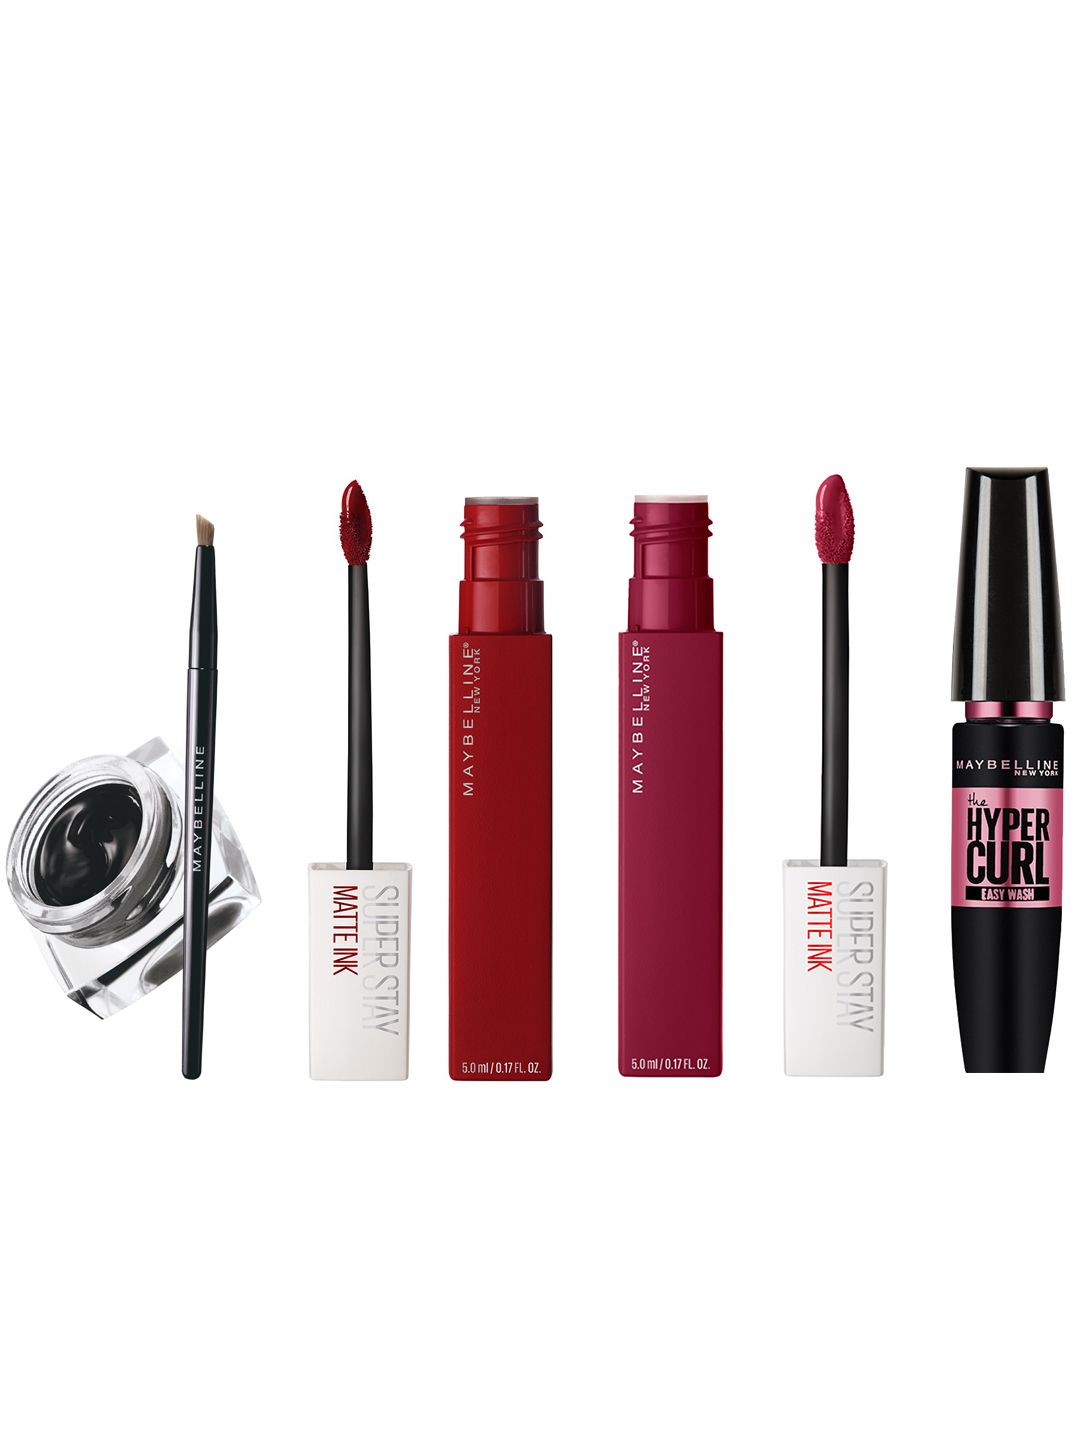 Maybelline New York Set Of Gel Eyeliner - Liquid Lipstick - Washable Mascara Price in India